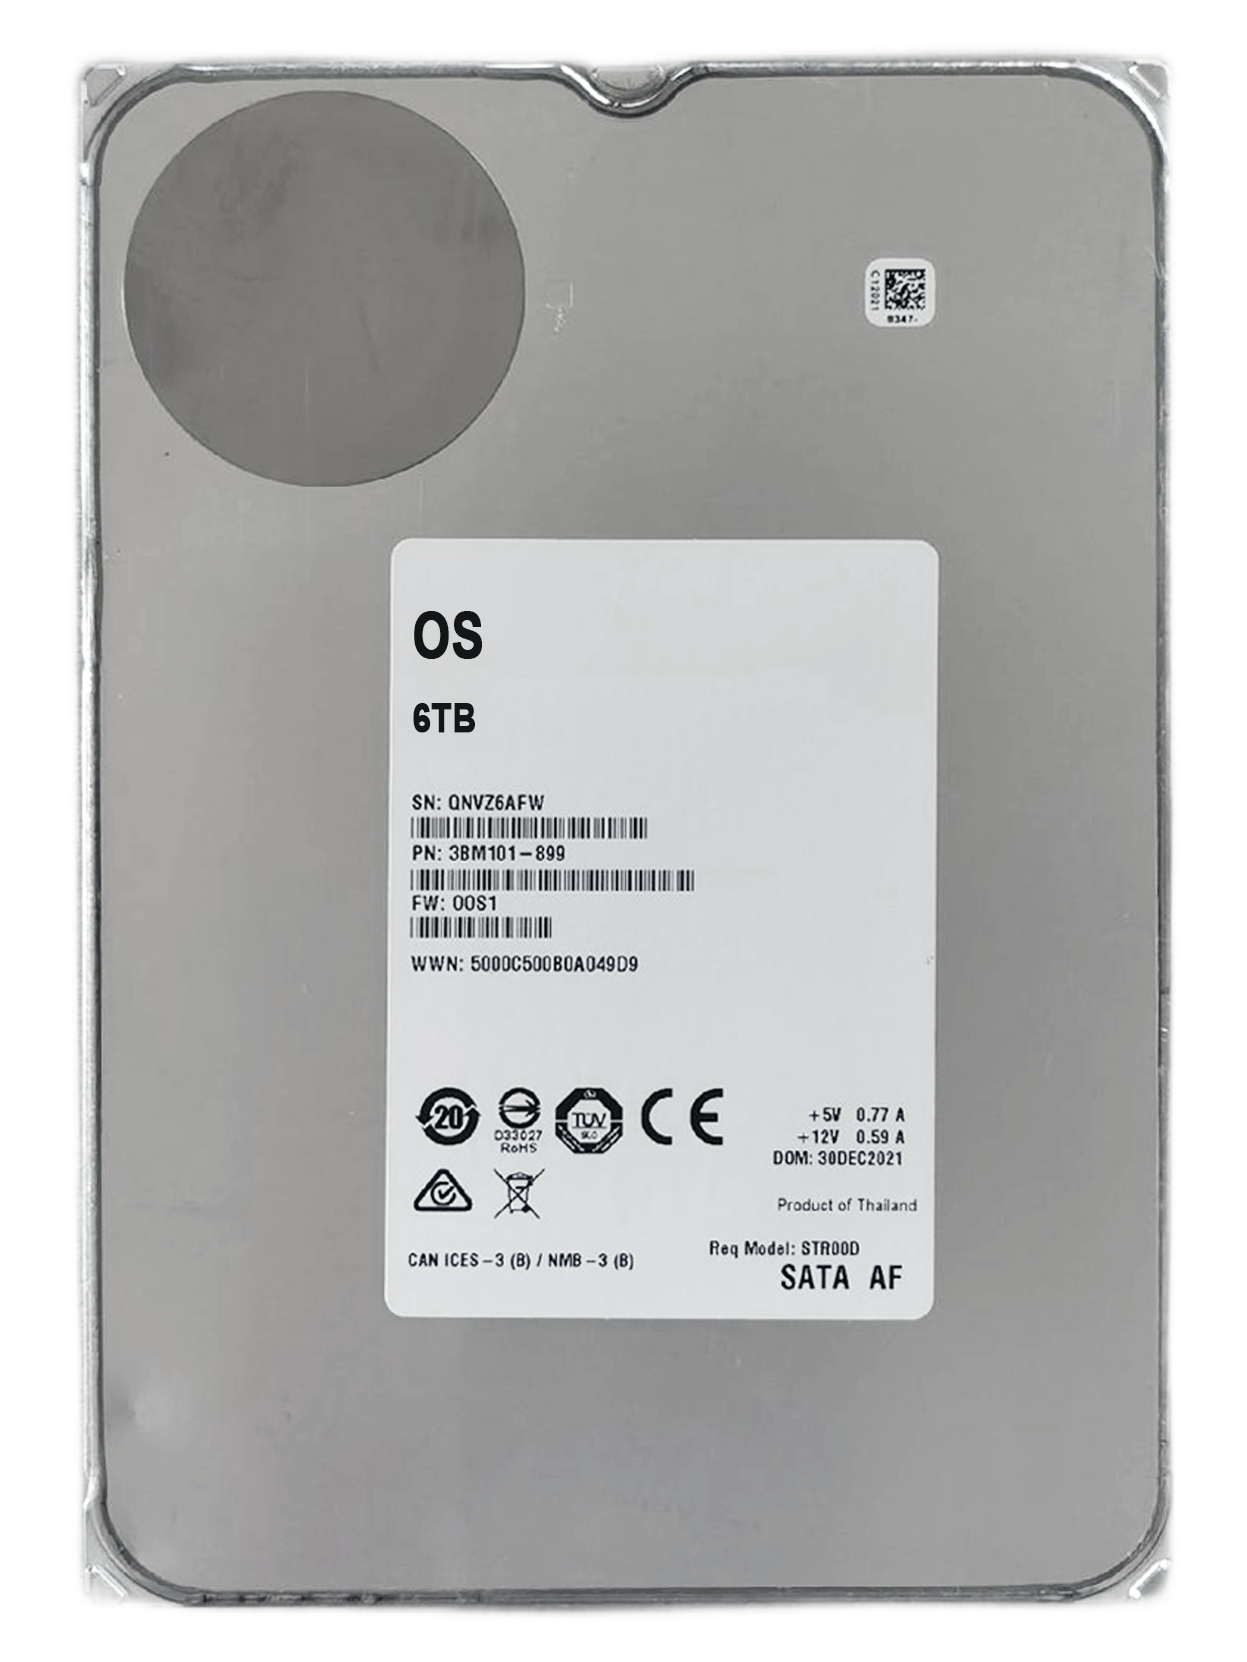 Жесткий диск OS ST6000NM0175 ST6000NM021A 6 ТБ ST6000NM0175 ST6000NM021A - купить в Москве, цены на Мегамаркет